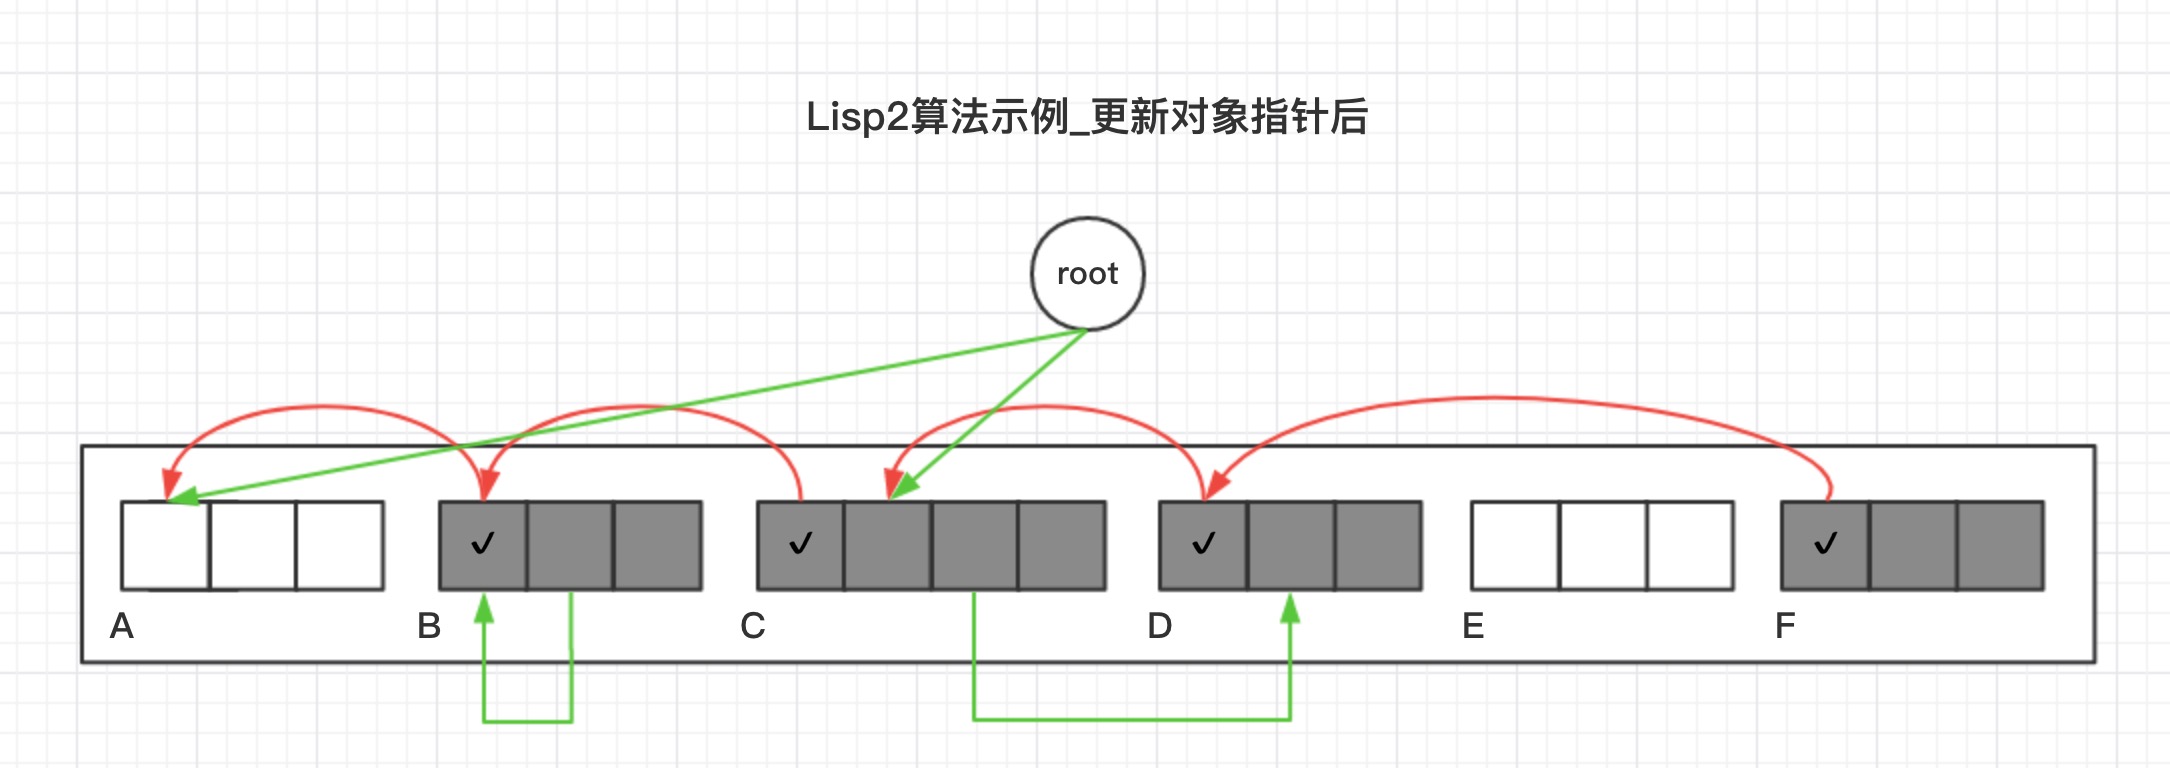 Lisp2算法示例_更新对象指针后